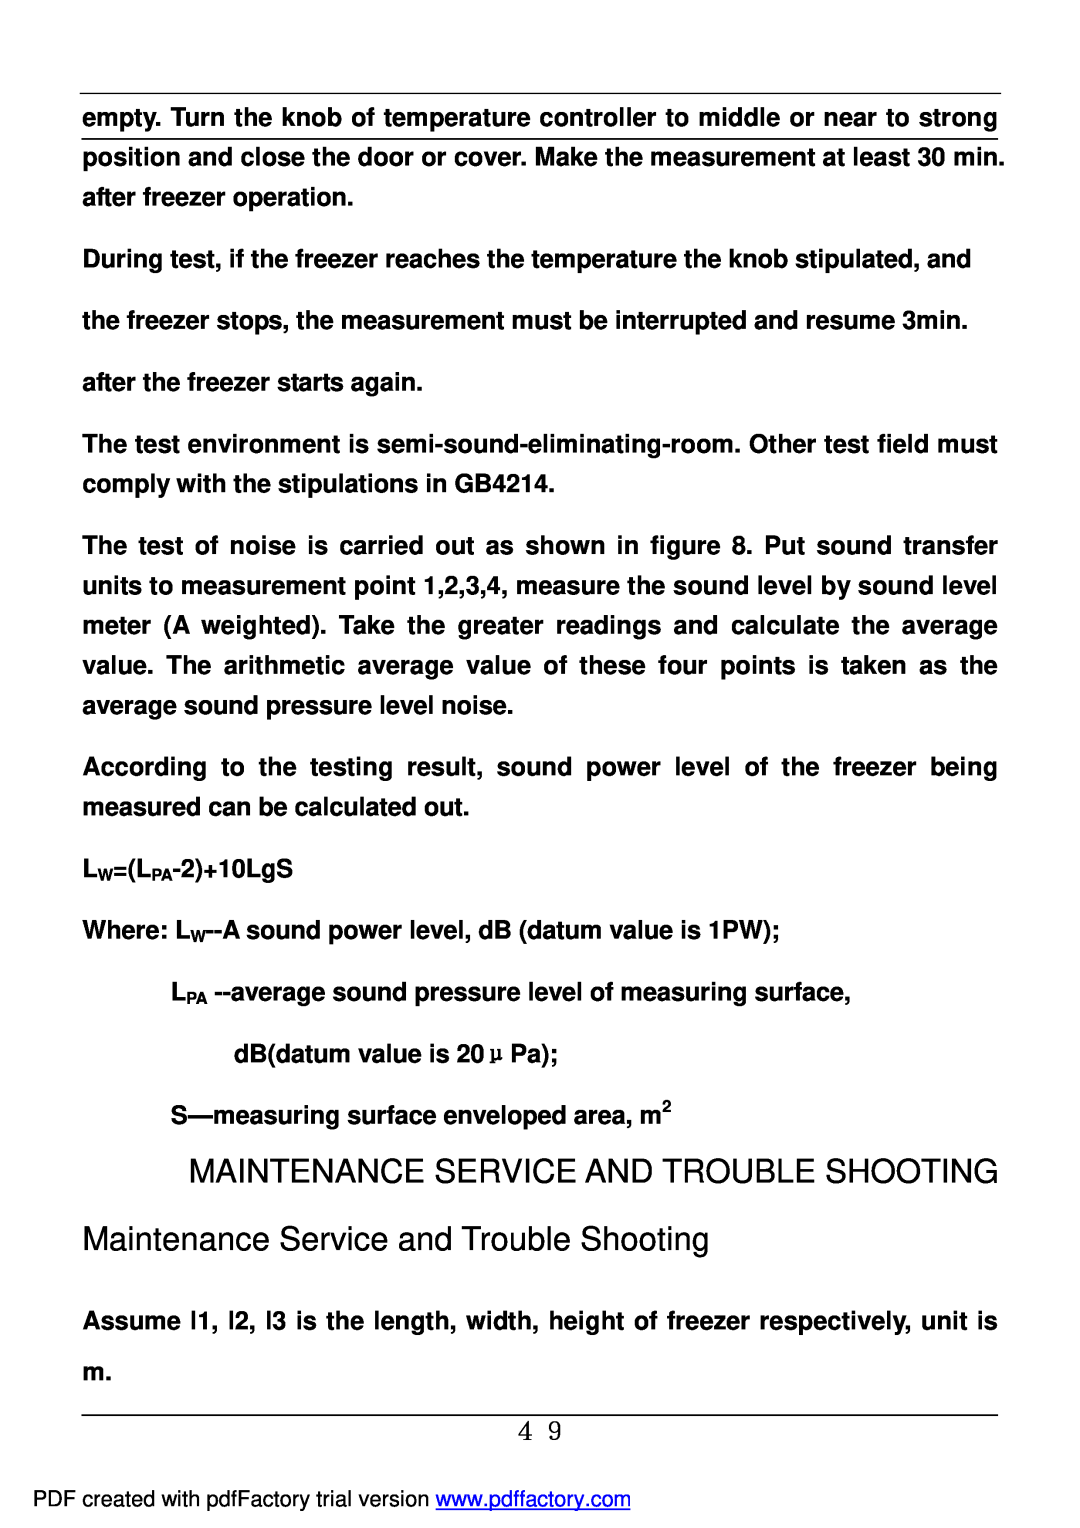 Haier BD-478A service manual Maintenance Service And Trouble Shooting, Maintenance Service and Trouble Shooting 